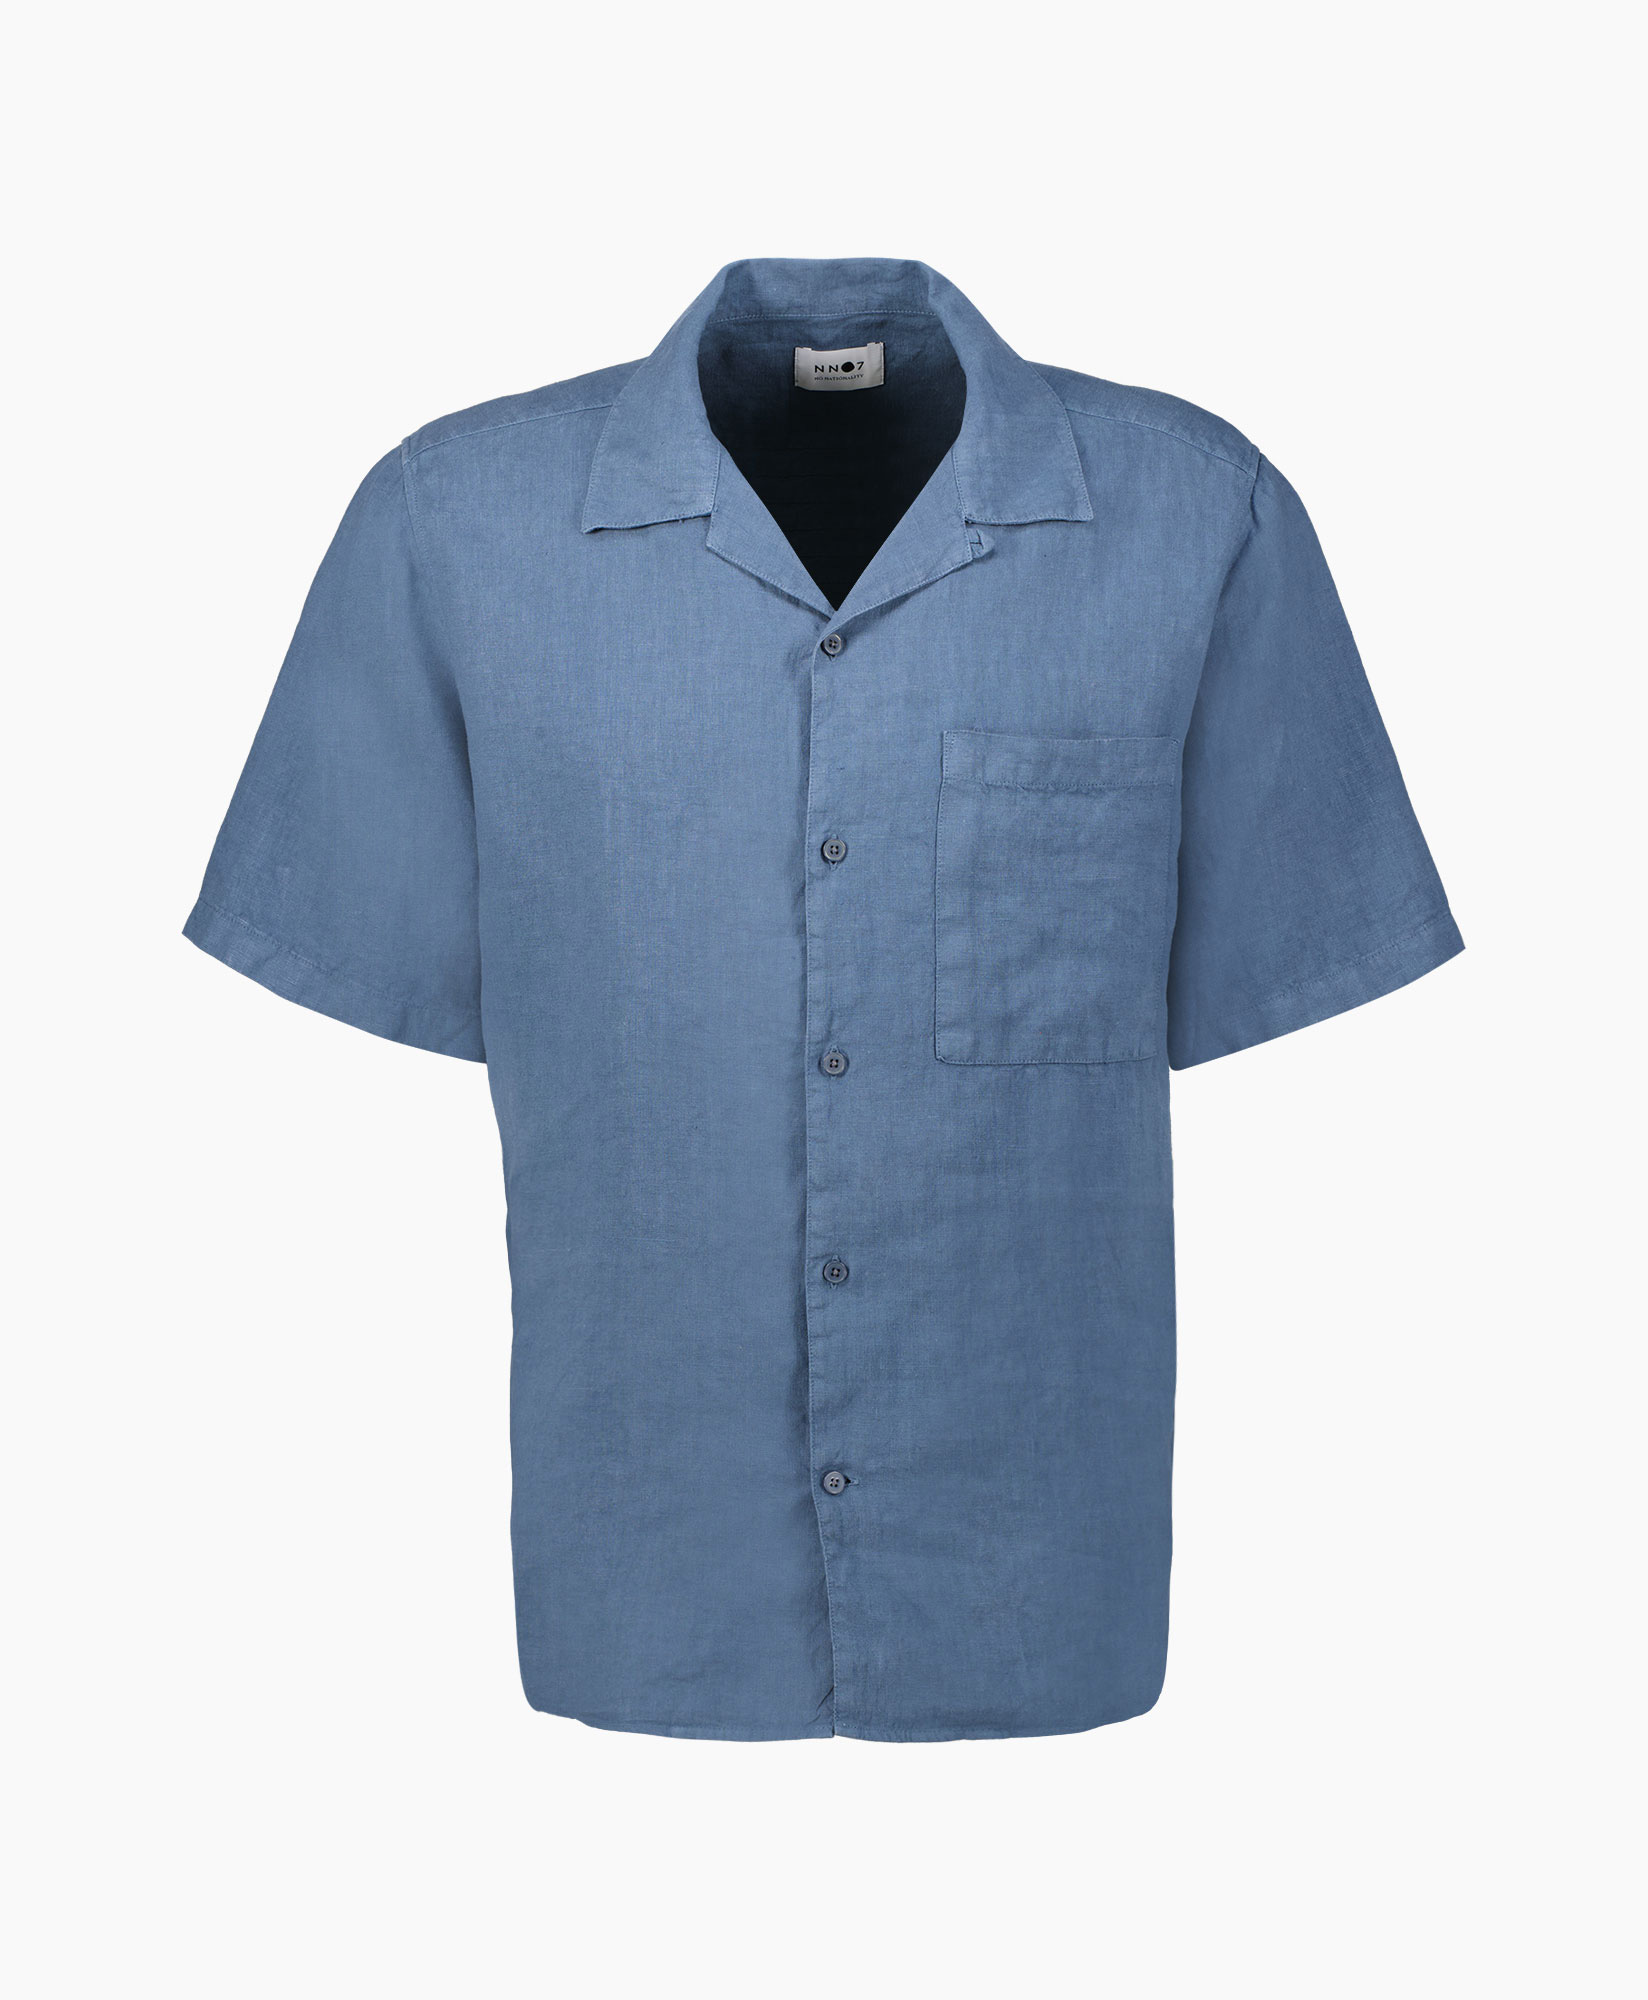 Nn07 Overhemd Shirt Julio Blauw